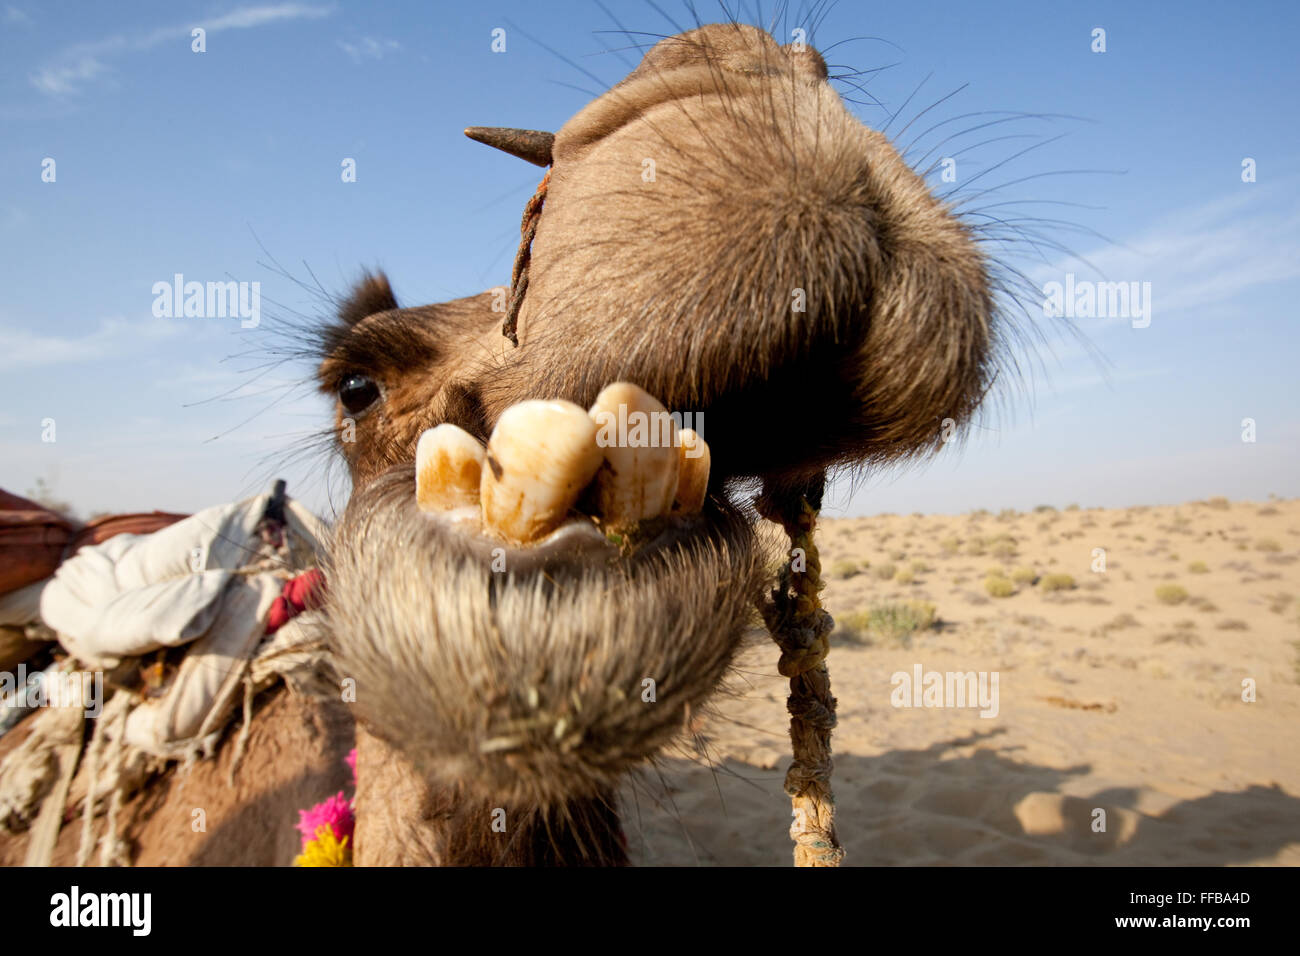 Portrait of a camel Stock Photo